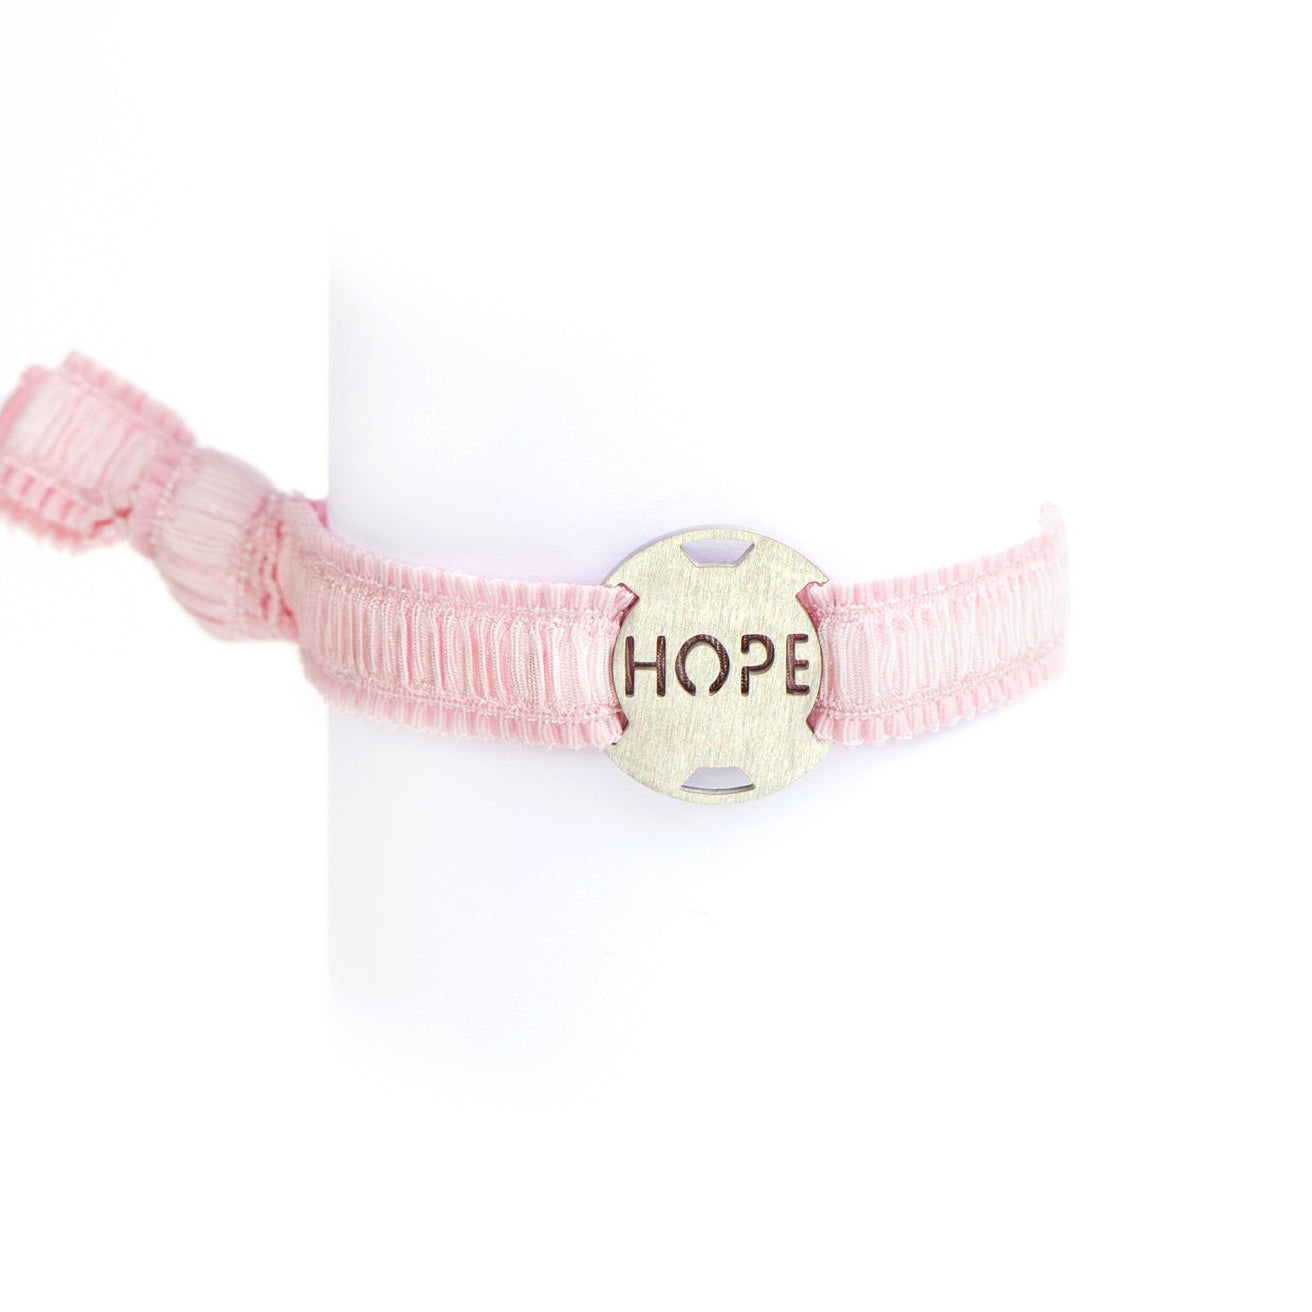 Survivor- Breast Cancer Awareness Bracelet - ivory & birch